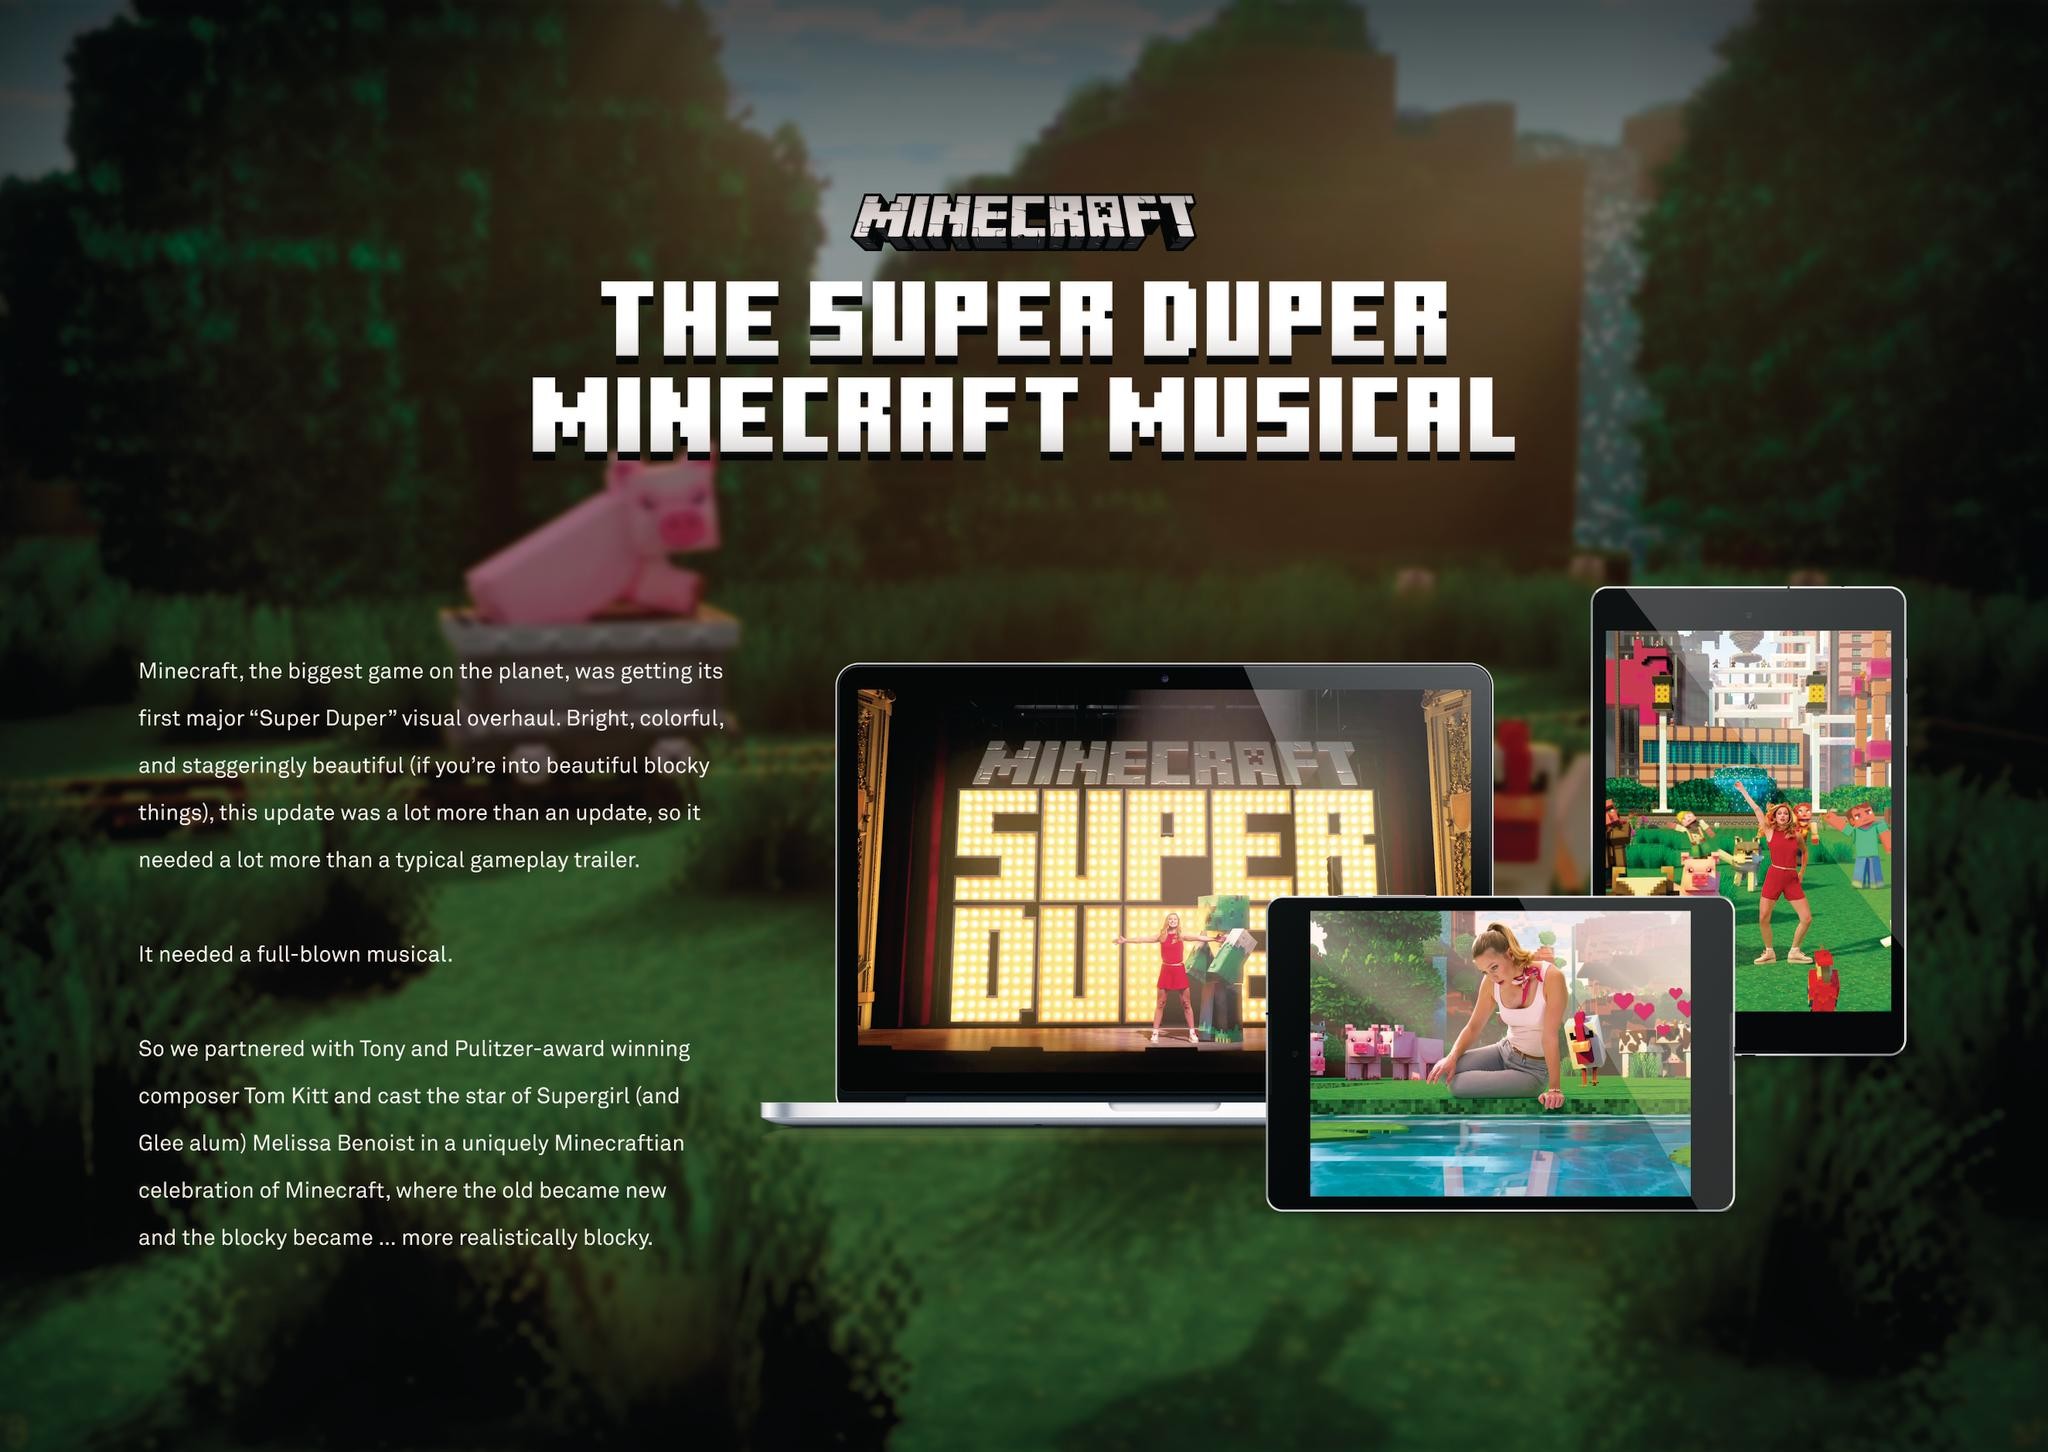 The Super Duper Minecraft Musical